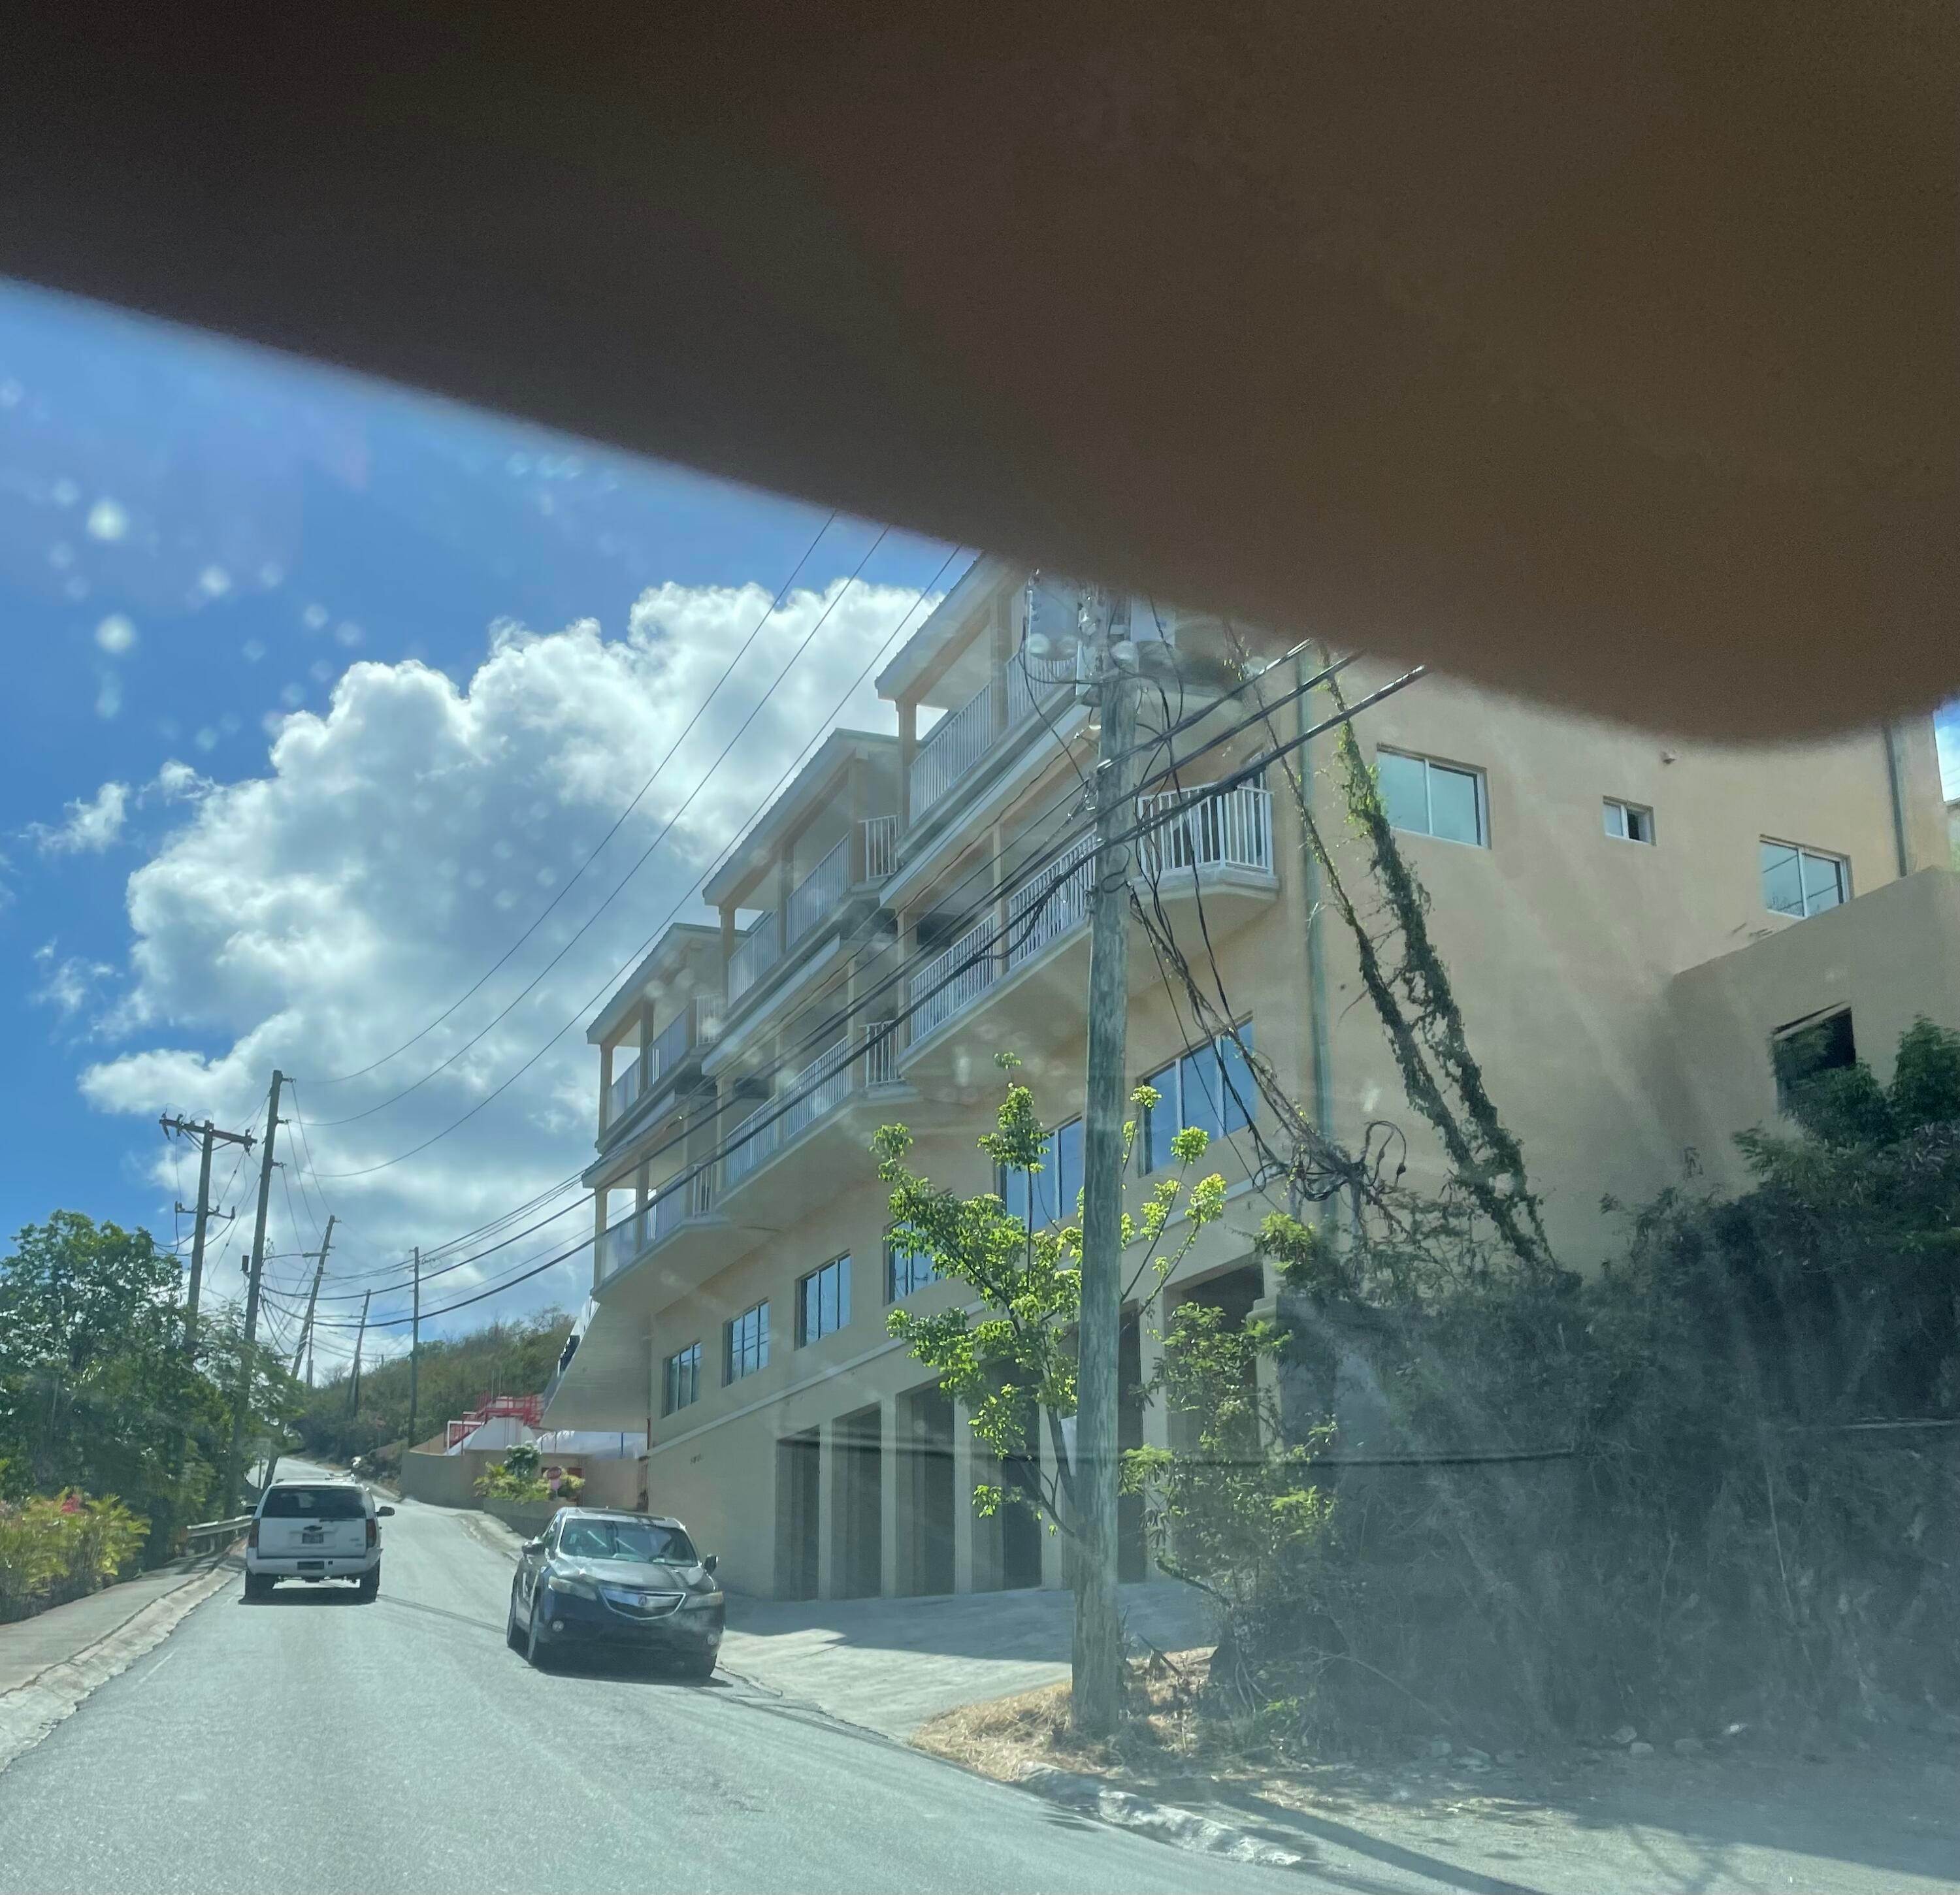 10. Condominiums at Other 481 Enighed CRUZ St John, Virgin Islands 00830 United States Virgin Islands